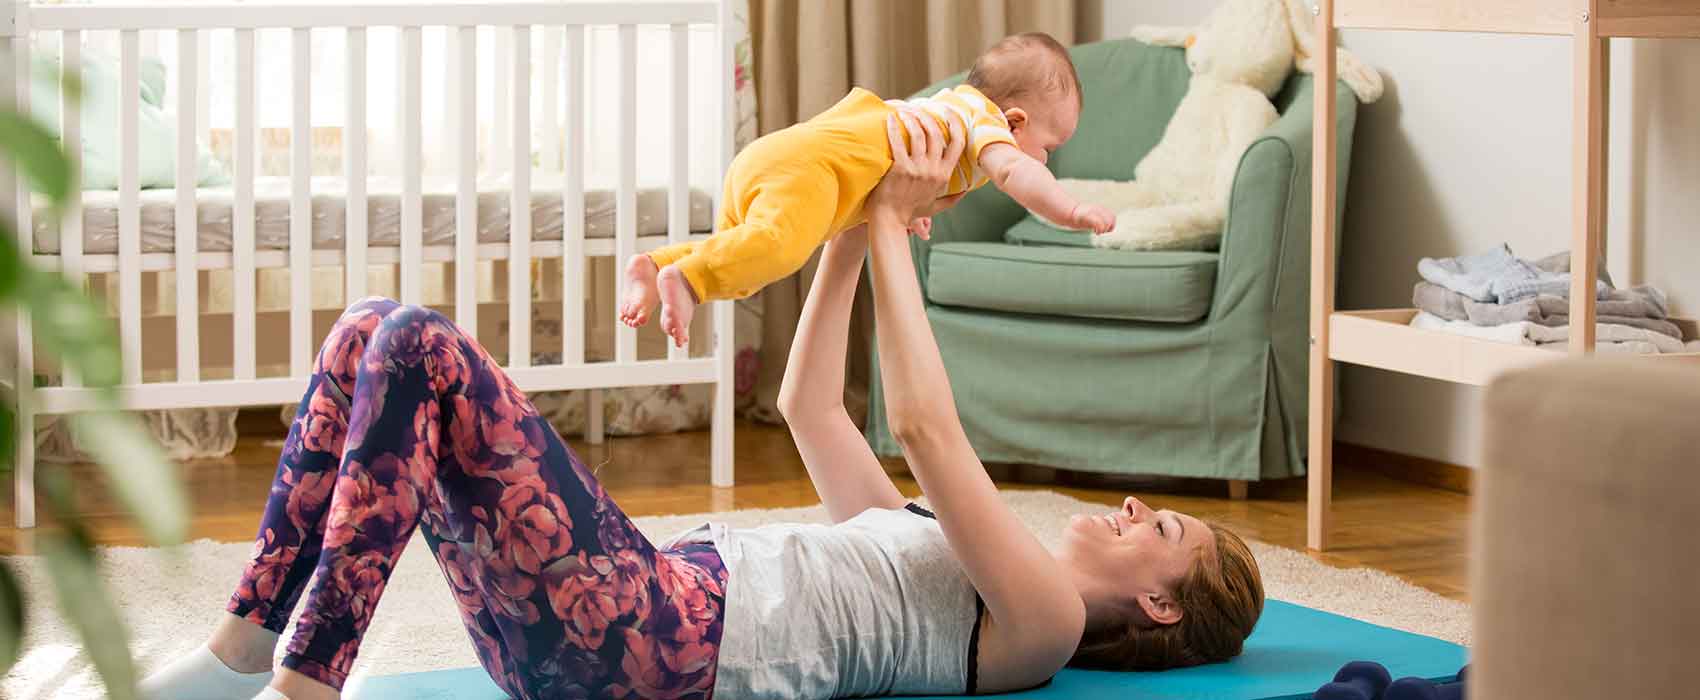 Postpartum Workout